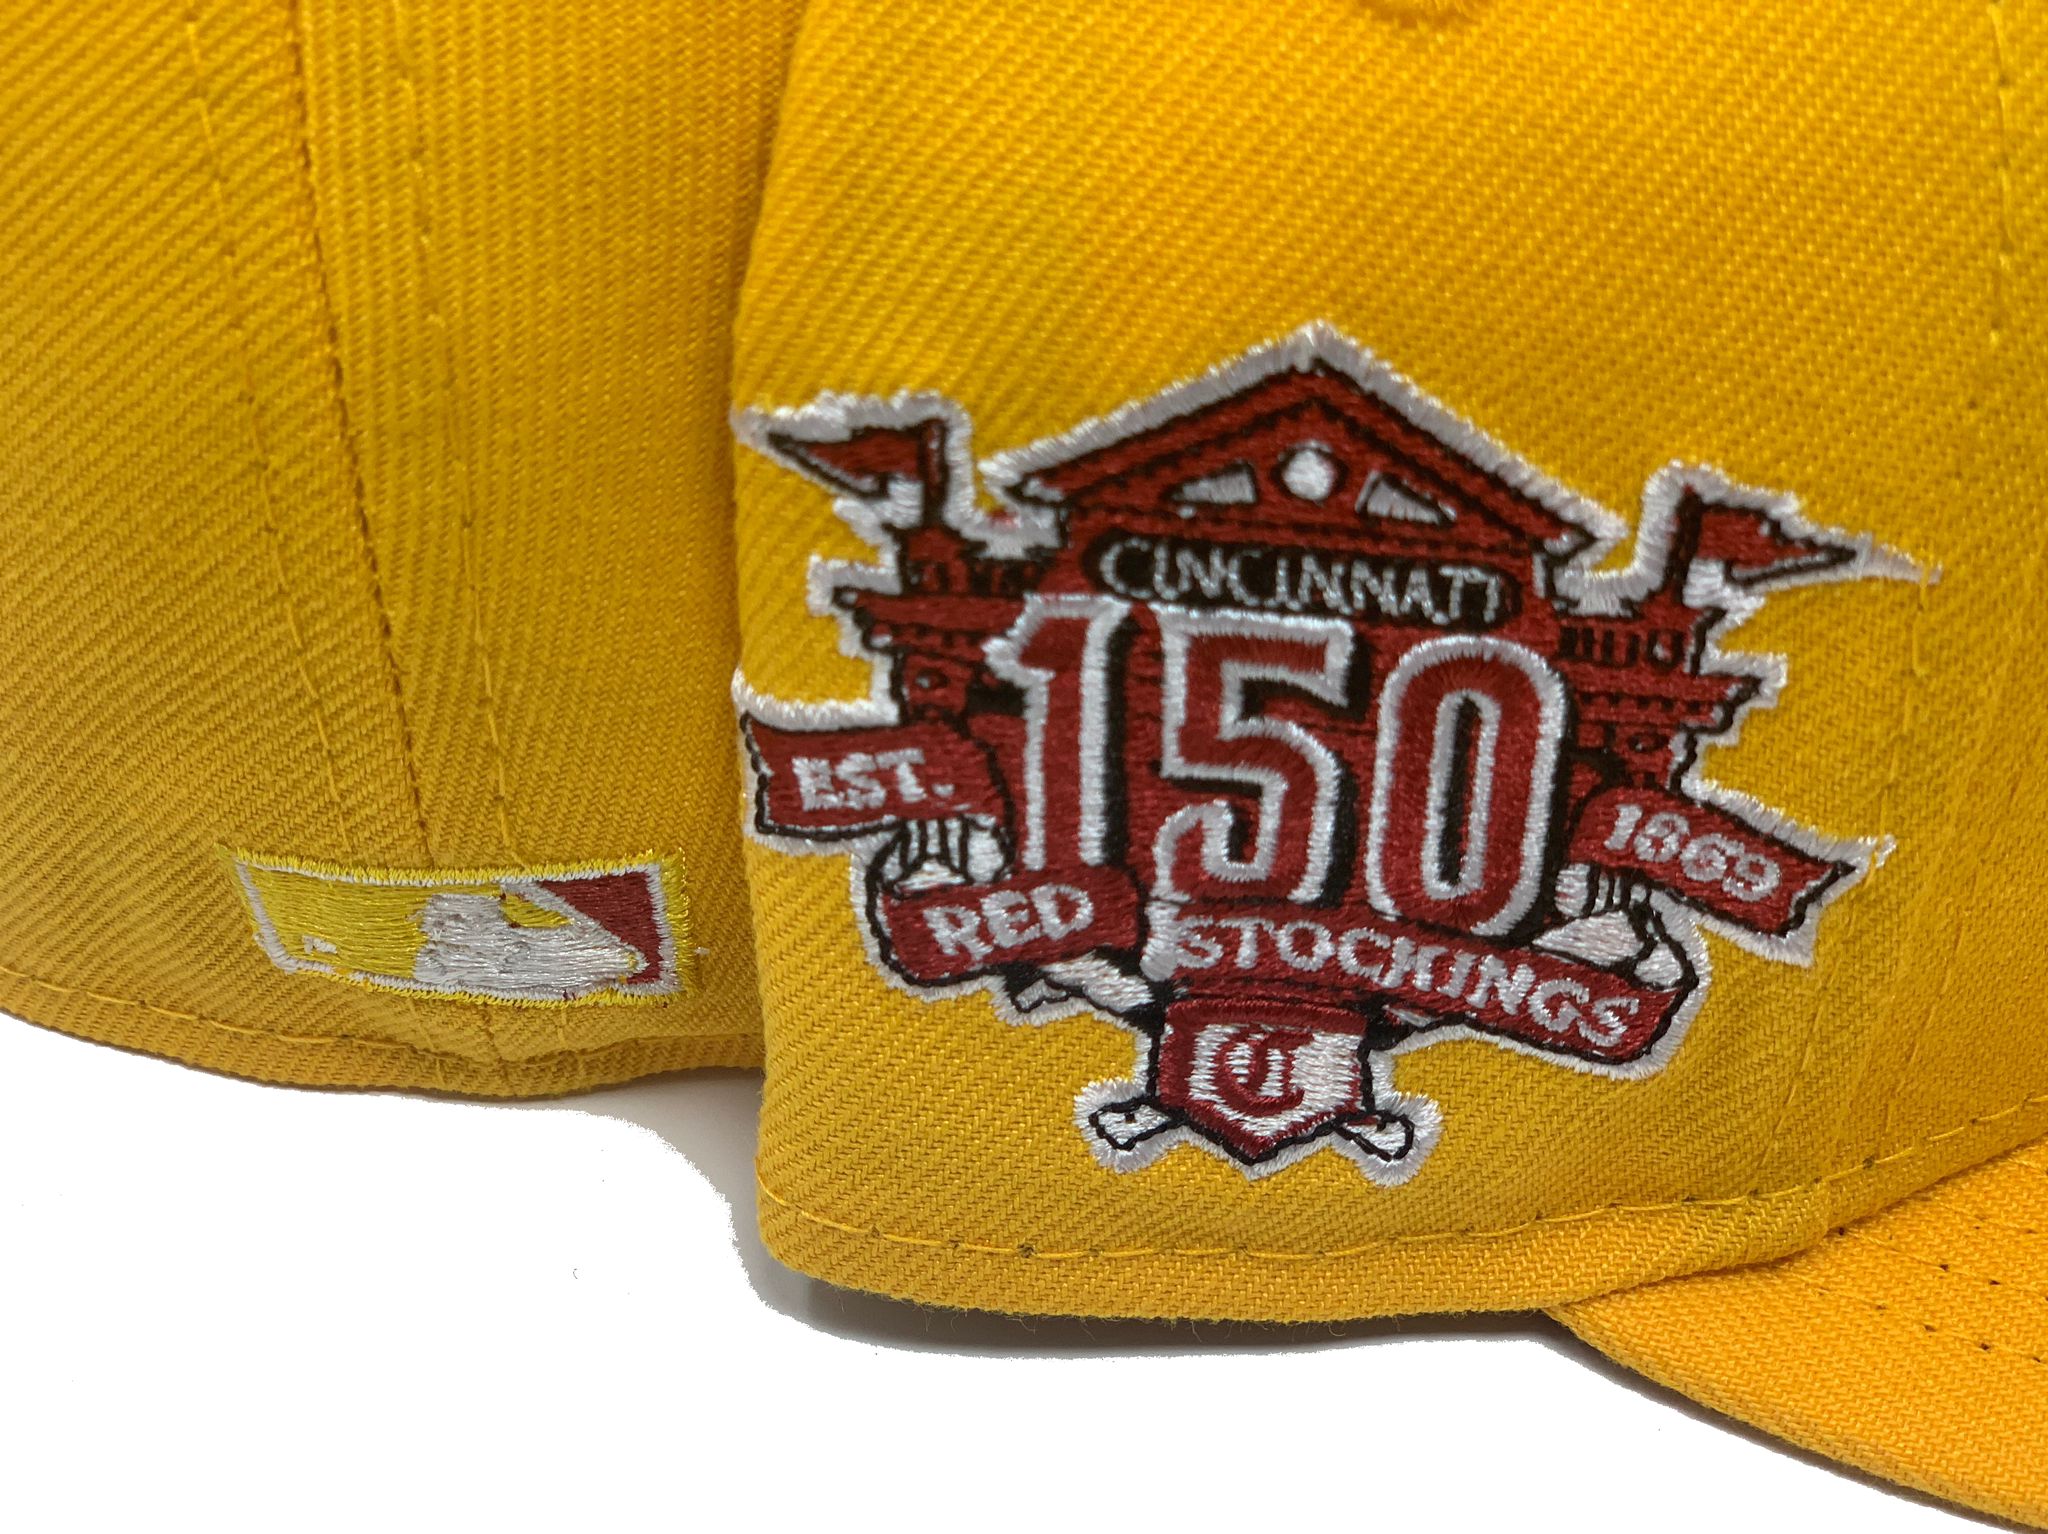 New Era Cincinnati Reds 150th Anniversary Fitted Hat 7 1/2 / Yellow